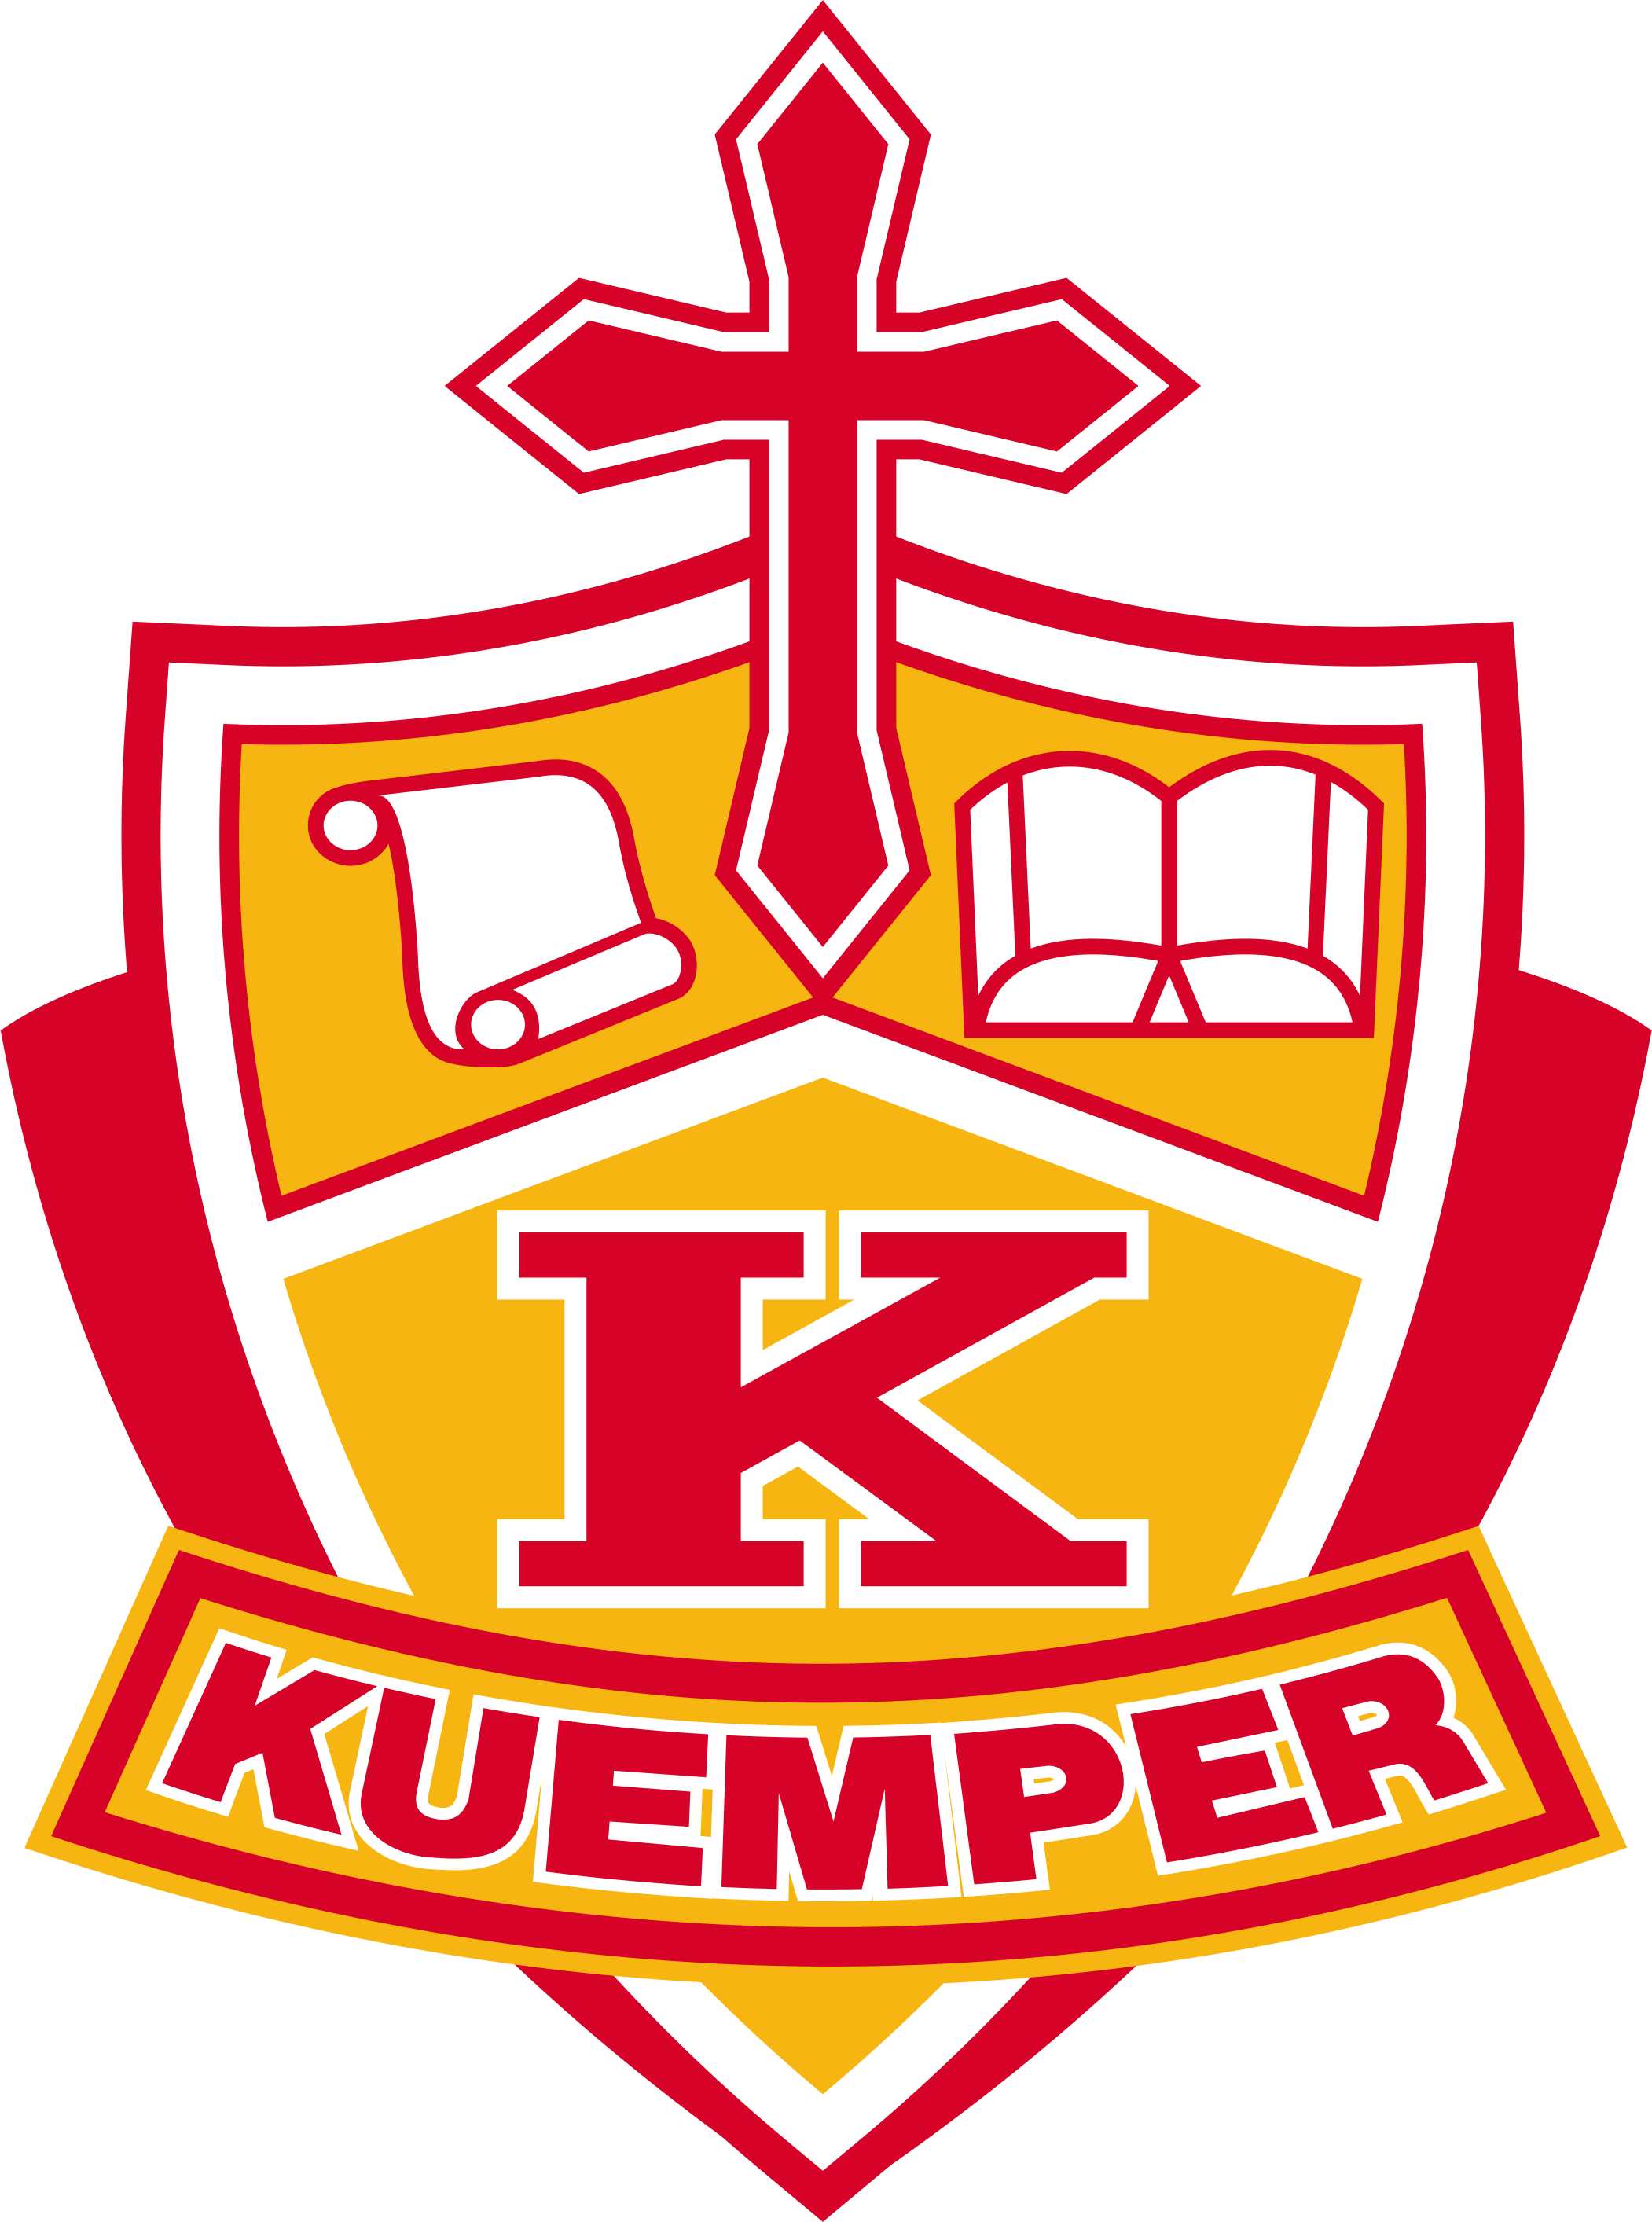 Catholic Logo - New Logos and Branding Standards Catholic School System